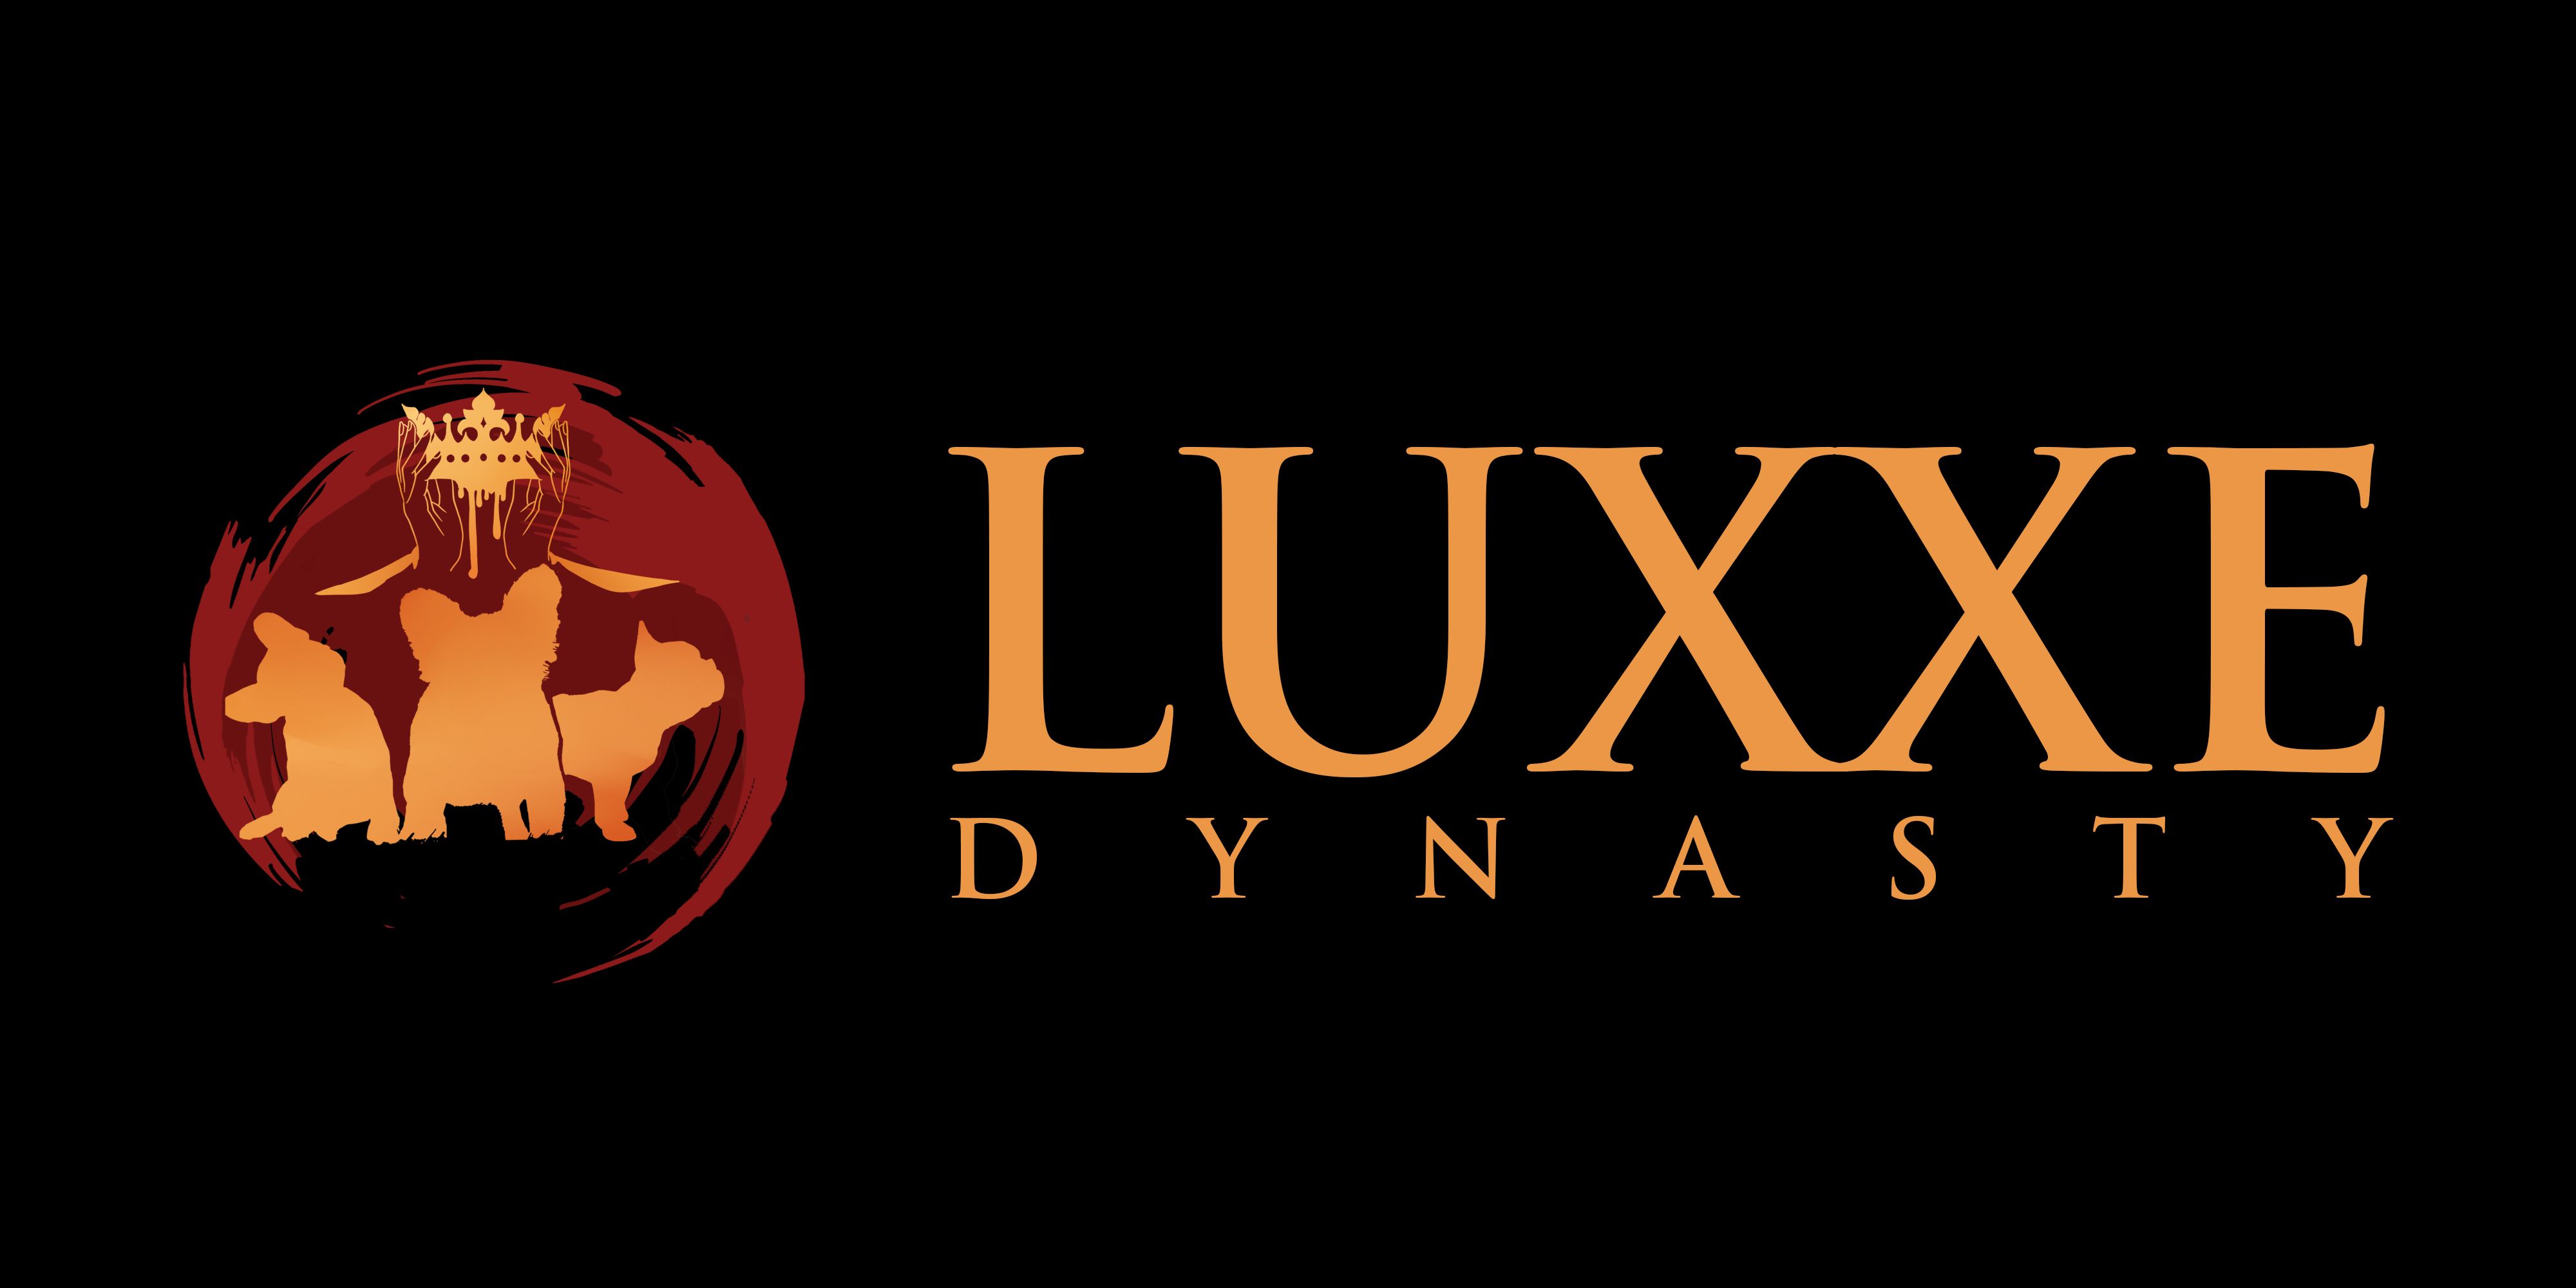 Luxxe Dynasty